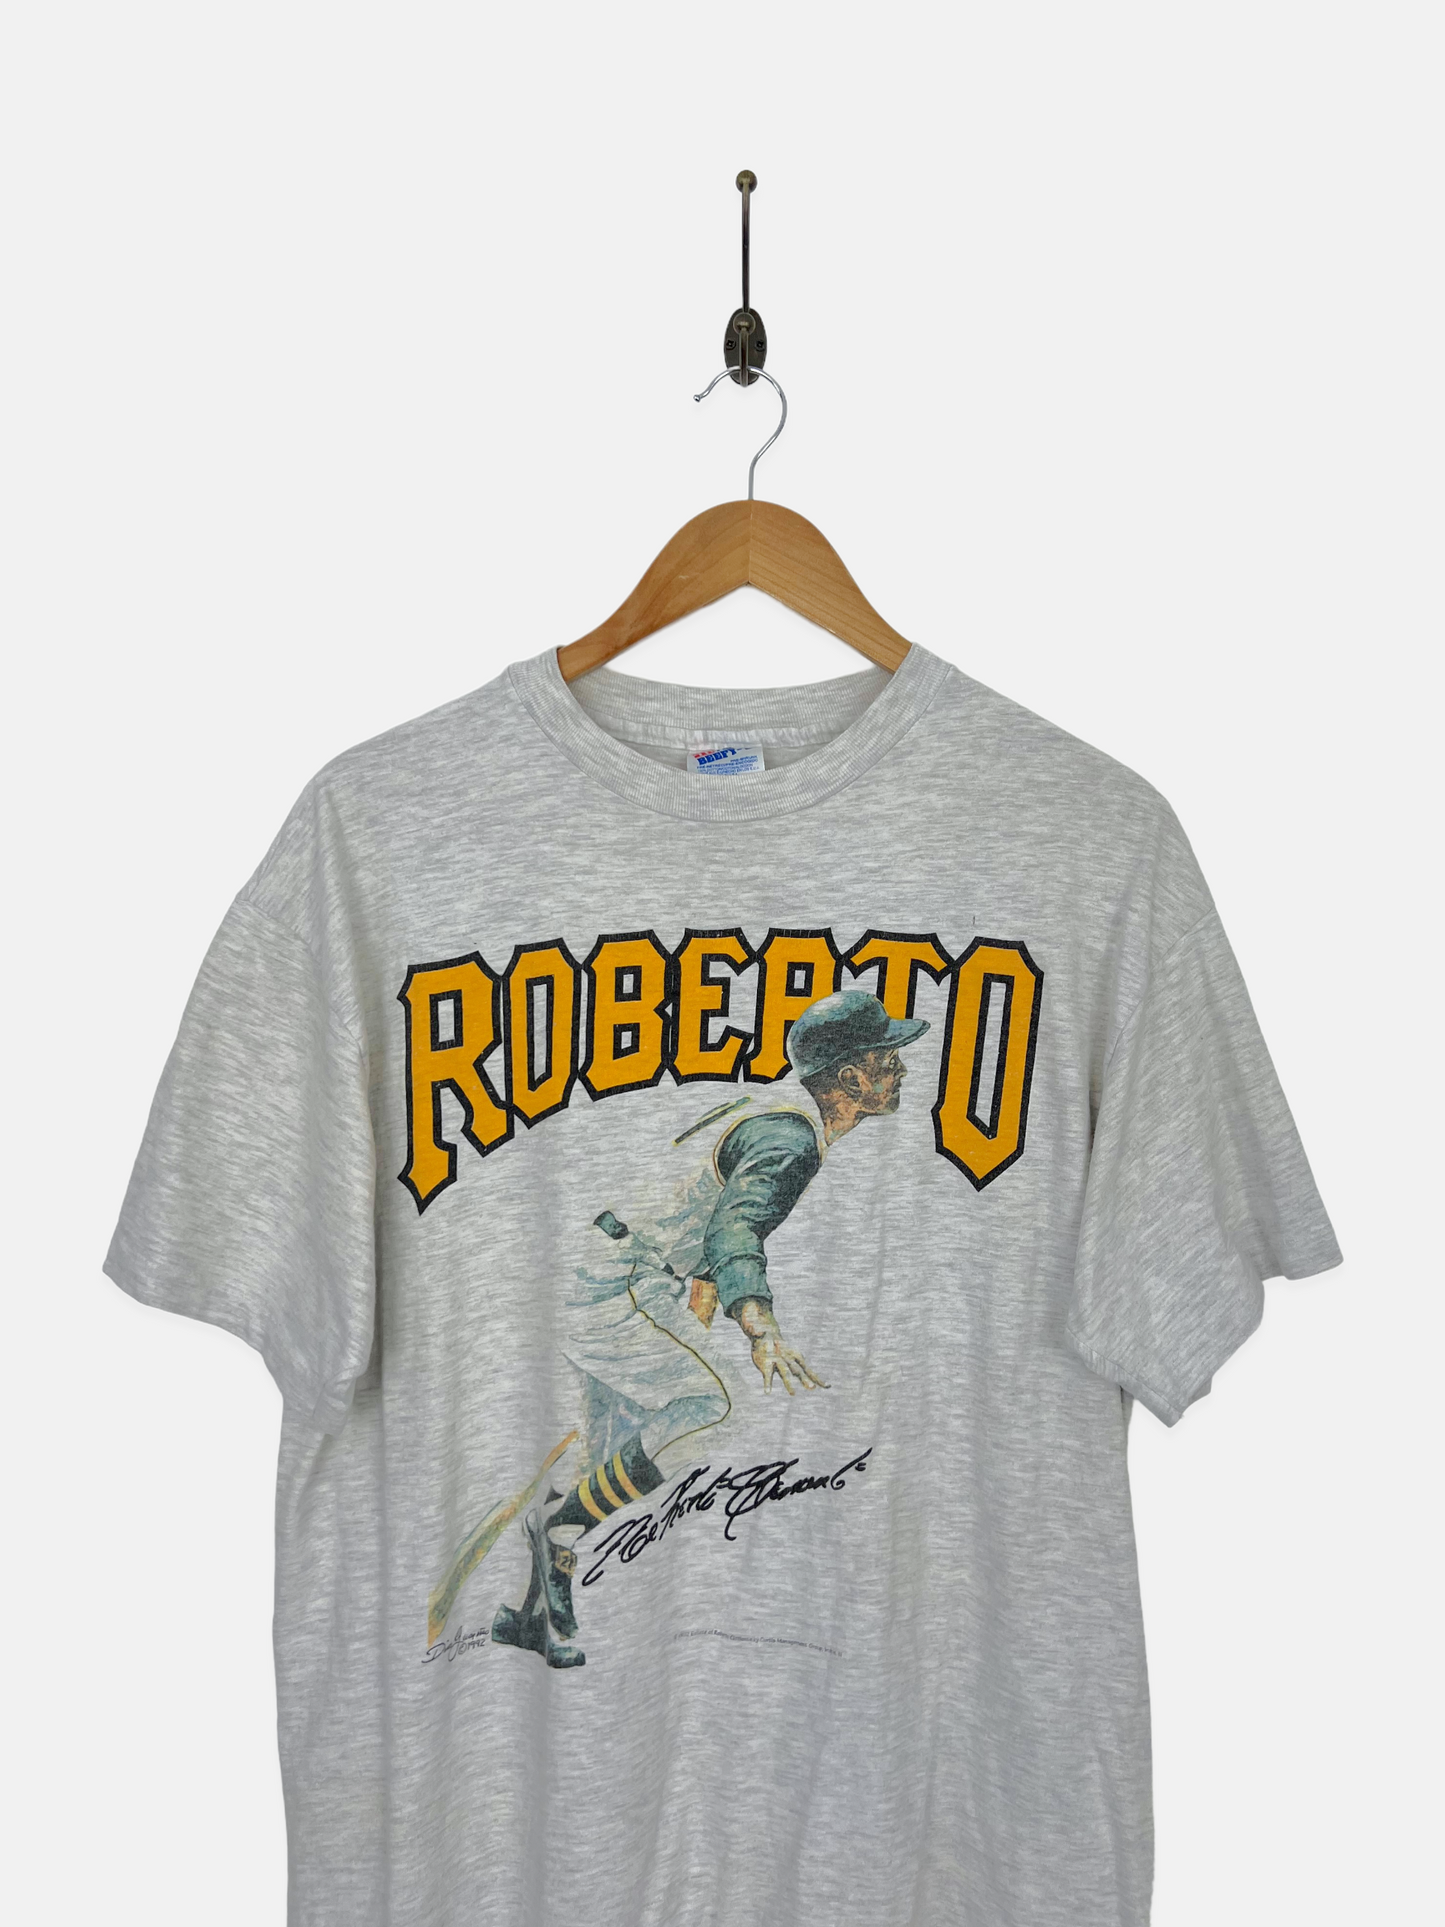 90's Pittsburgh Pirates Roberto MLB USA Made Vintage T-Shirt Size 12-14